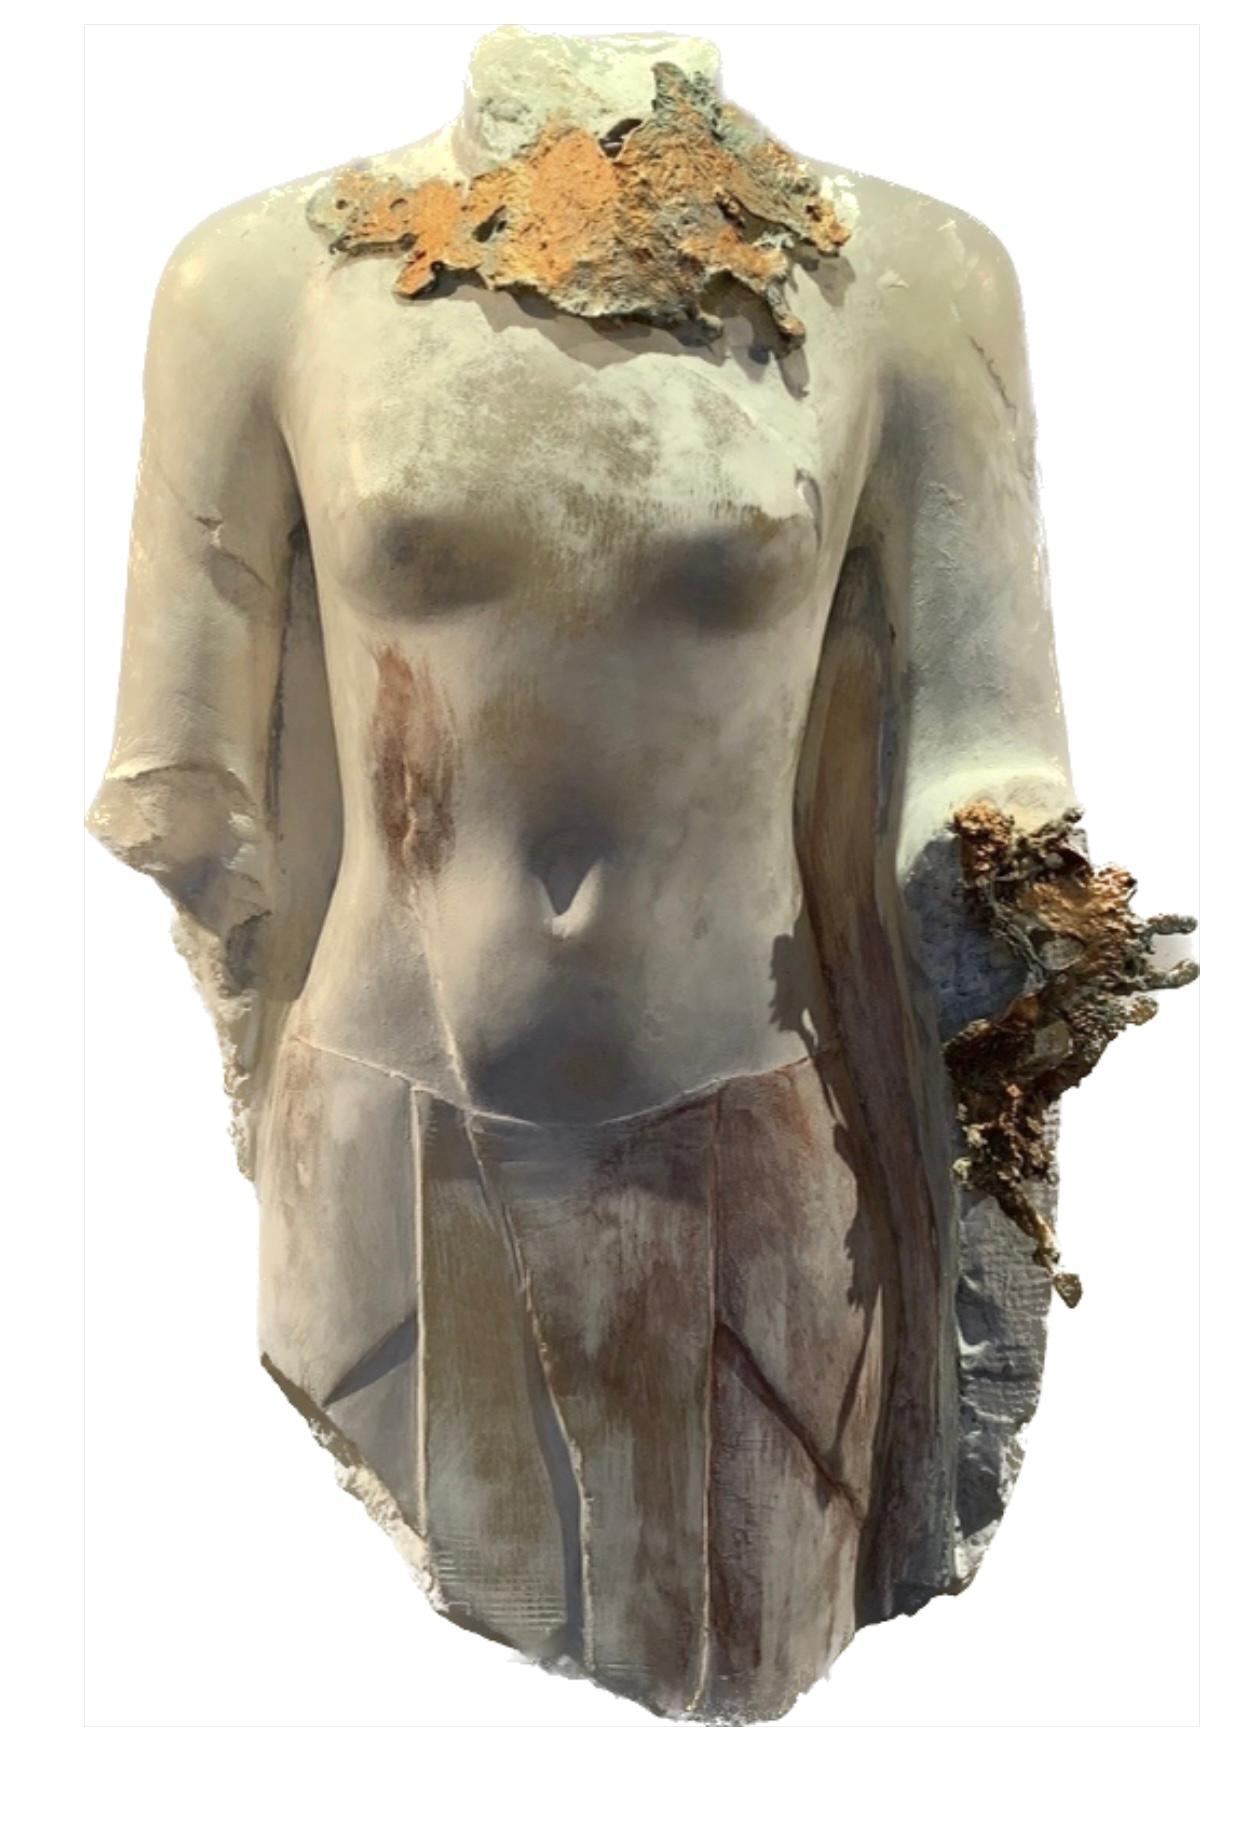 Gerti Bierenbroodspot Nude Sculpture - Arsinoe IV Alabaster Sculpture Gold Copper Contemporary In Stock